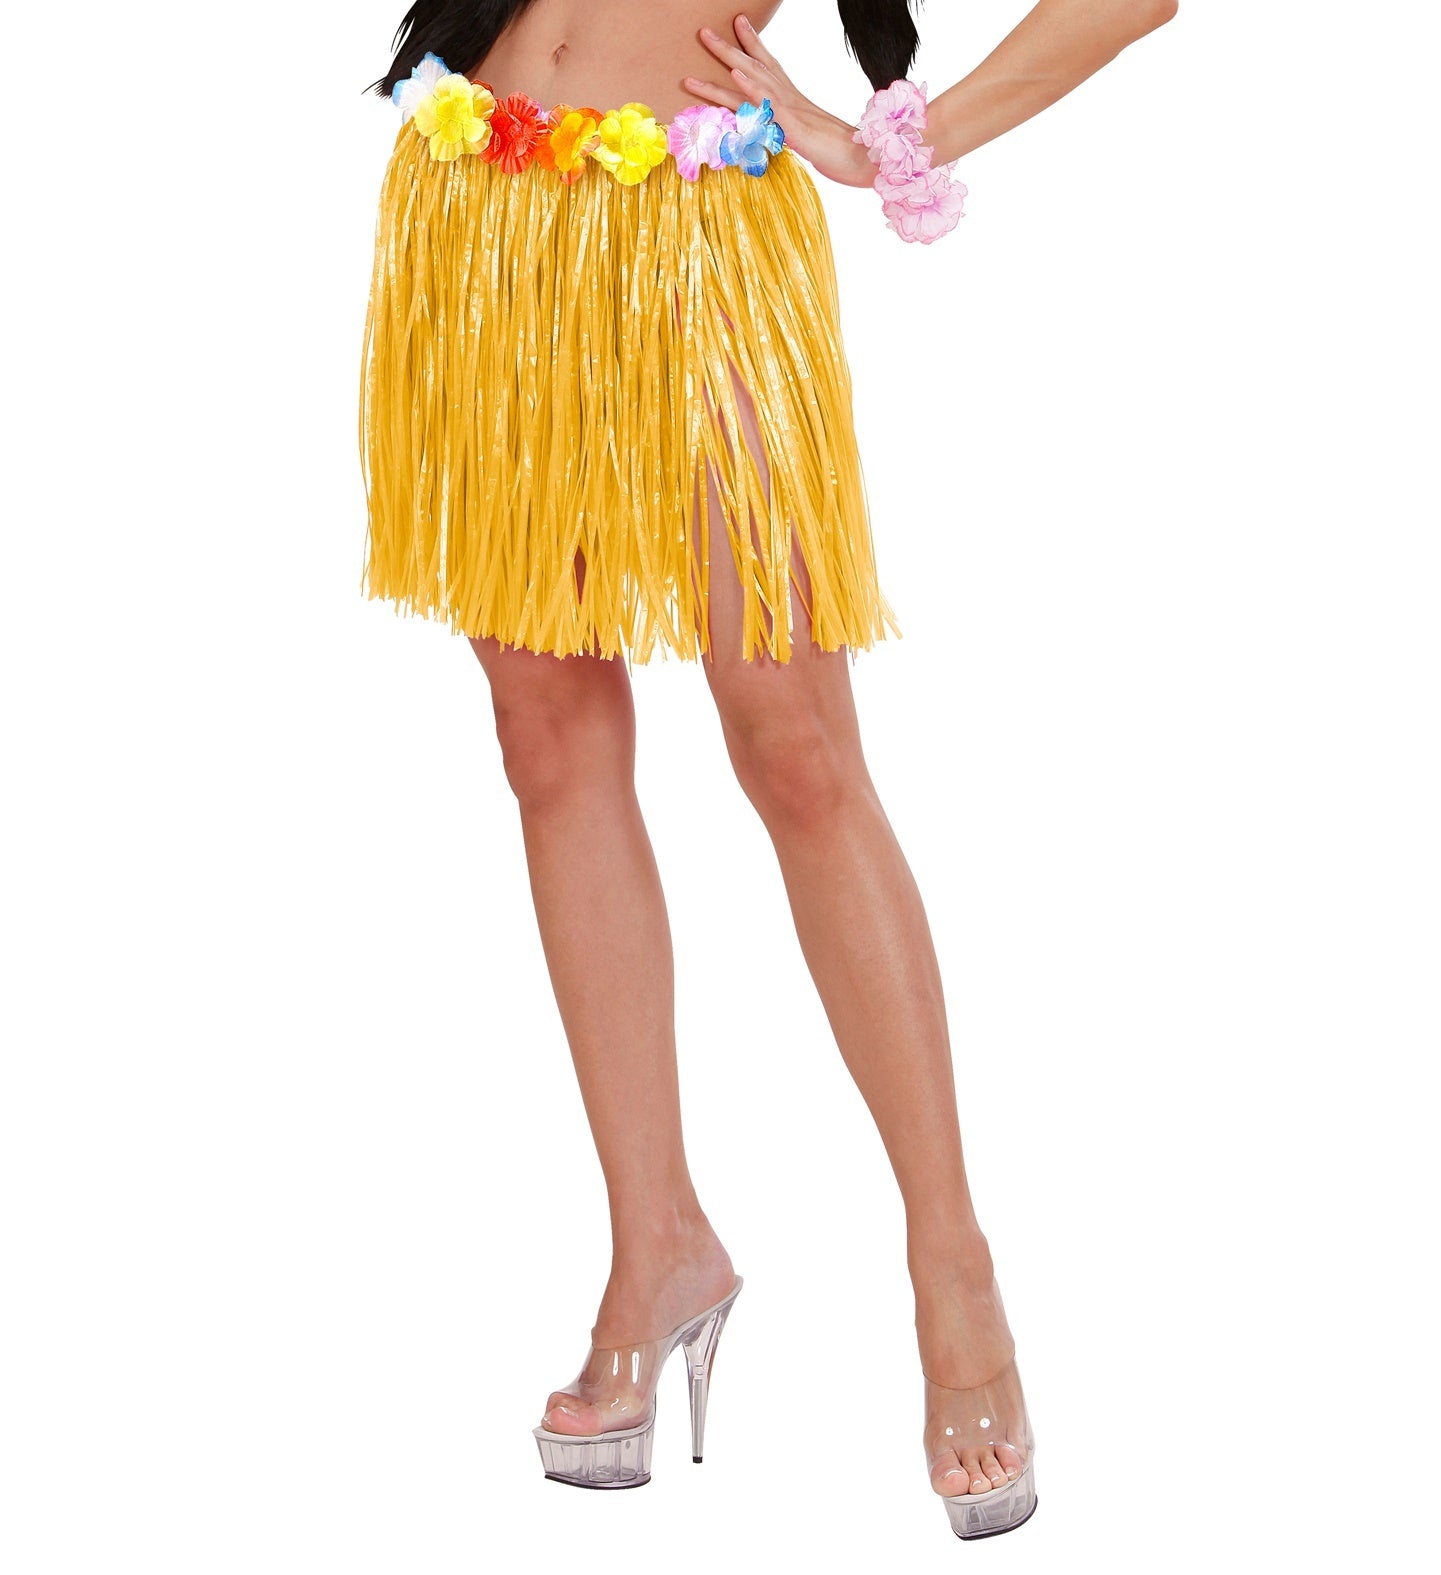 Widmann - Hawaii & Carribean & Tropisch Kostuum - Hoe Lal La Mini Hawaii Rokje 45 Centimeter Vrouw - wit / beige - One Size - Carnavalskleding - Verkleedkleding